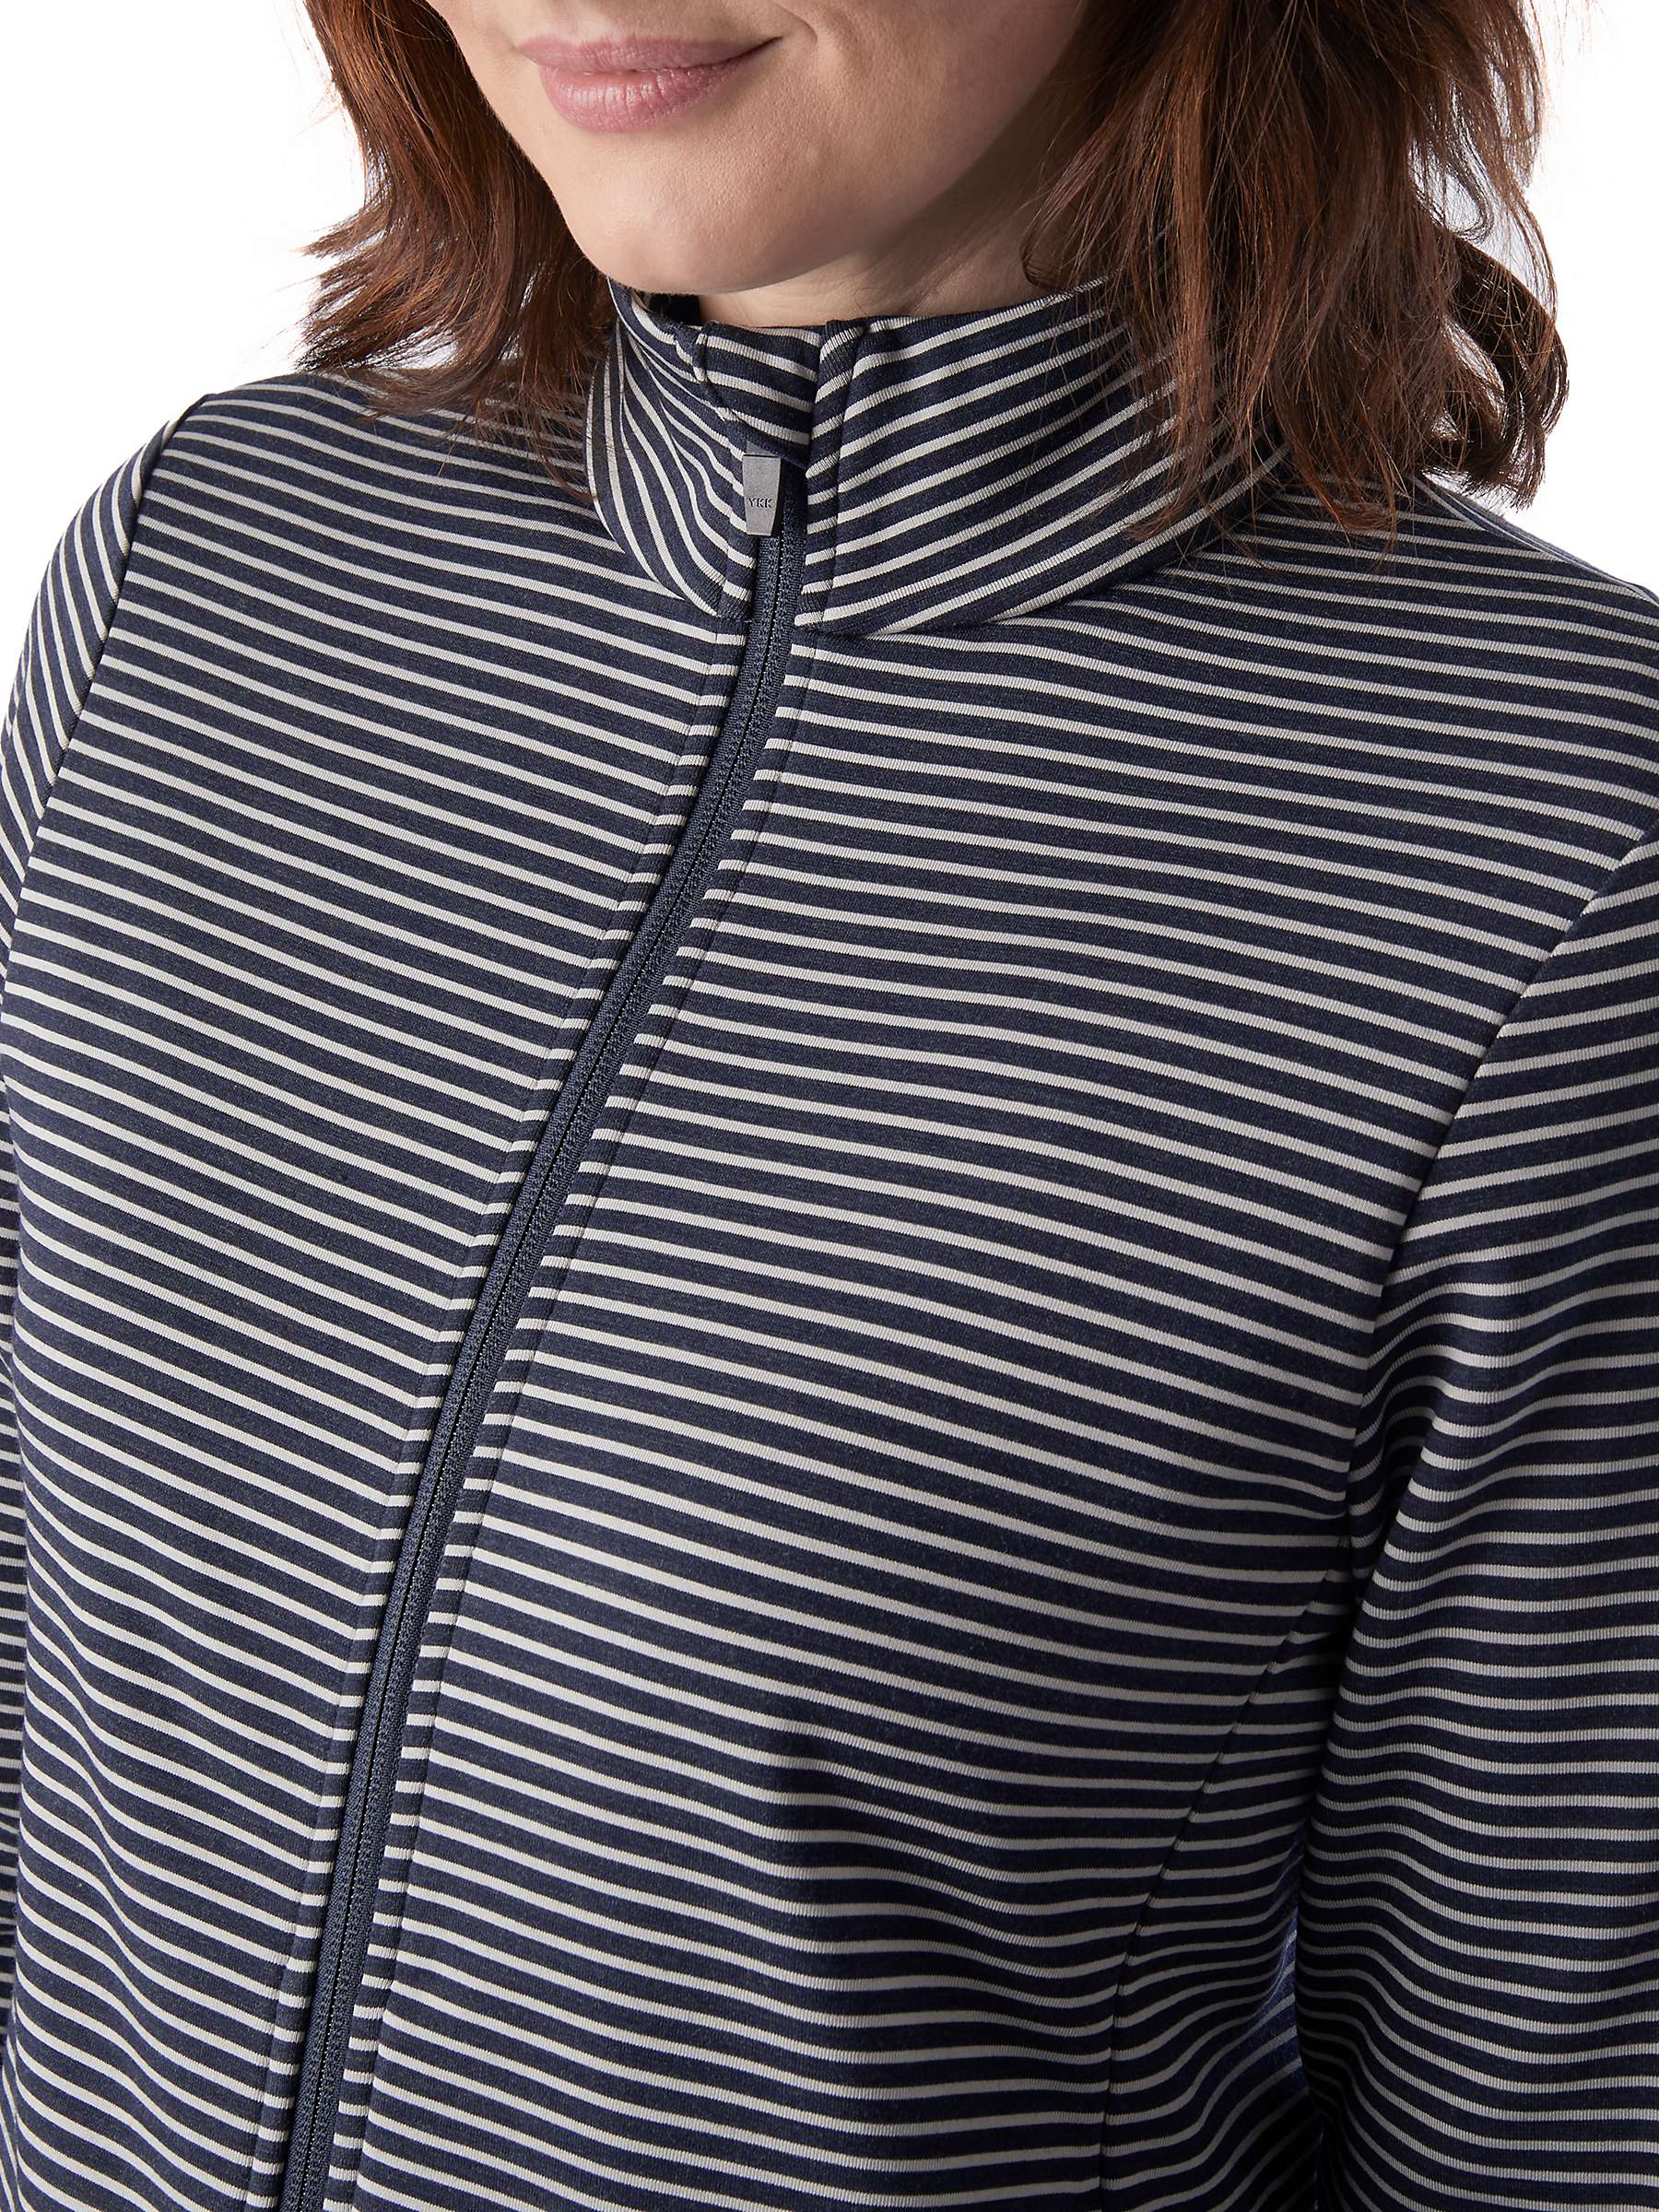 Buy Rohan Radiant Stripe Merino Fleece Jacket Online at johnlewis.com